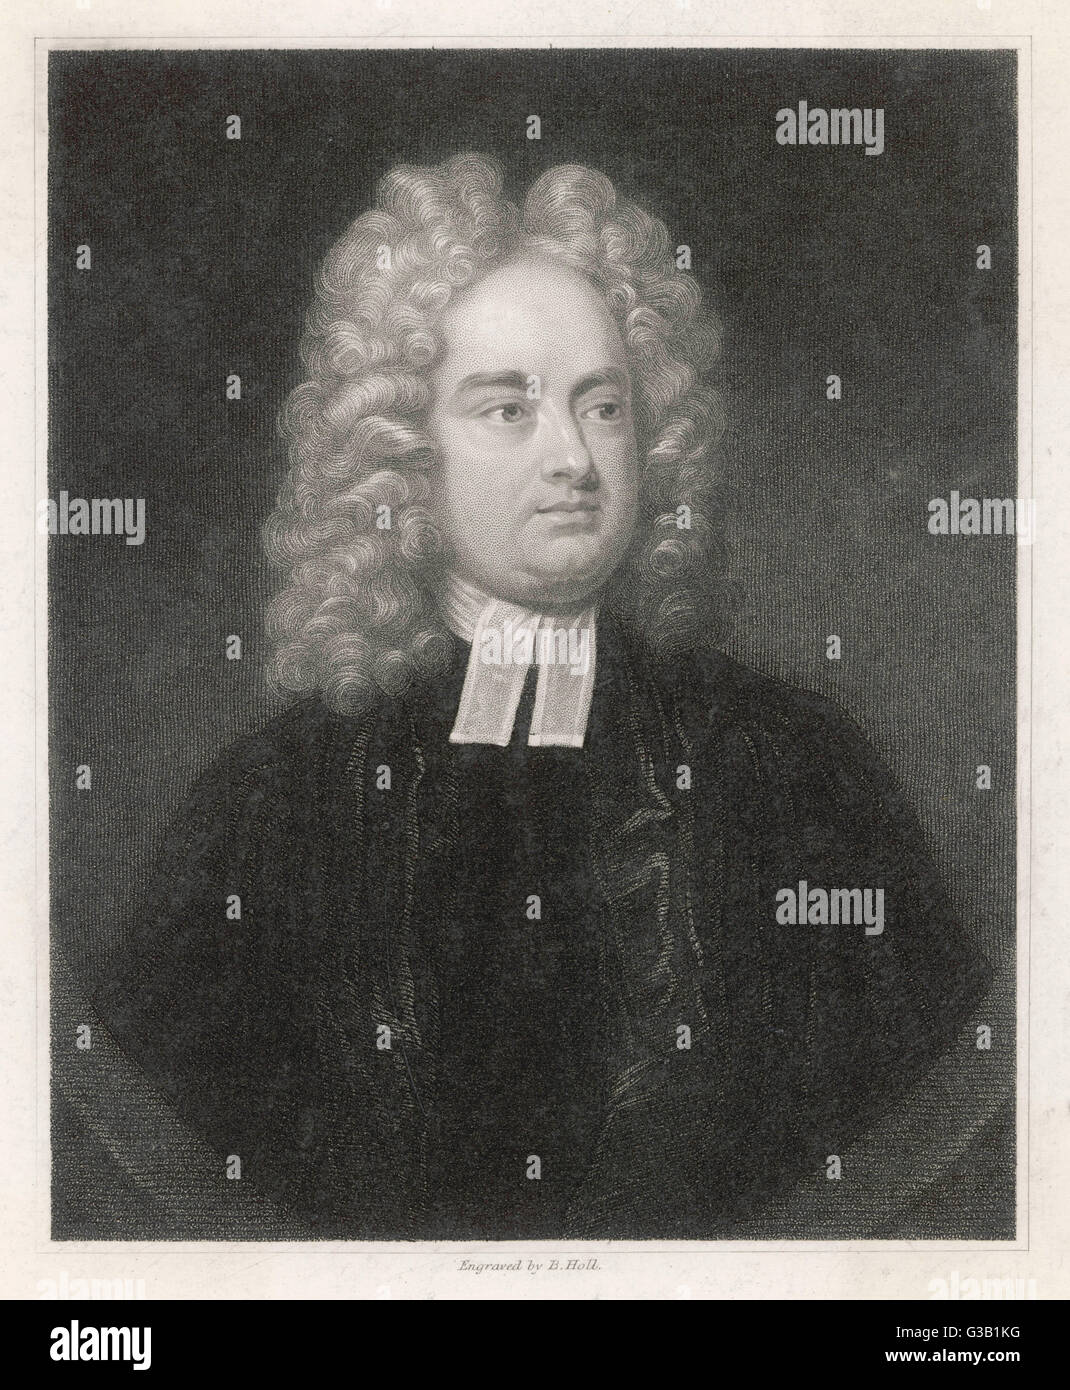 Jonathan Swift Banque D'Images